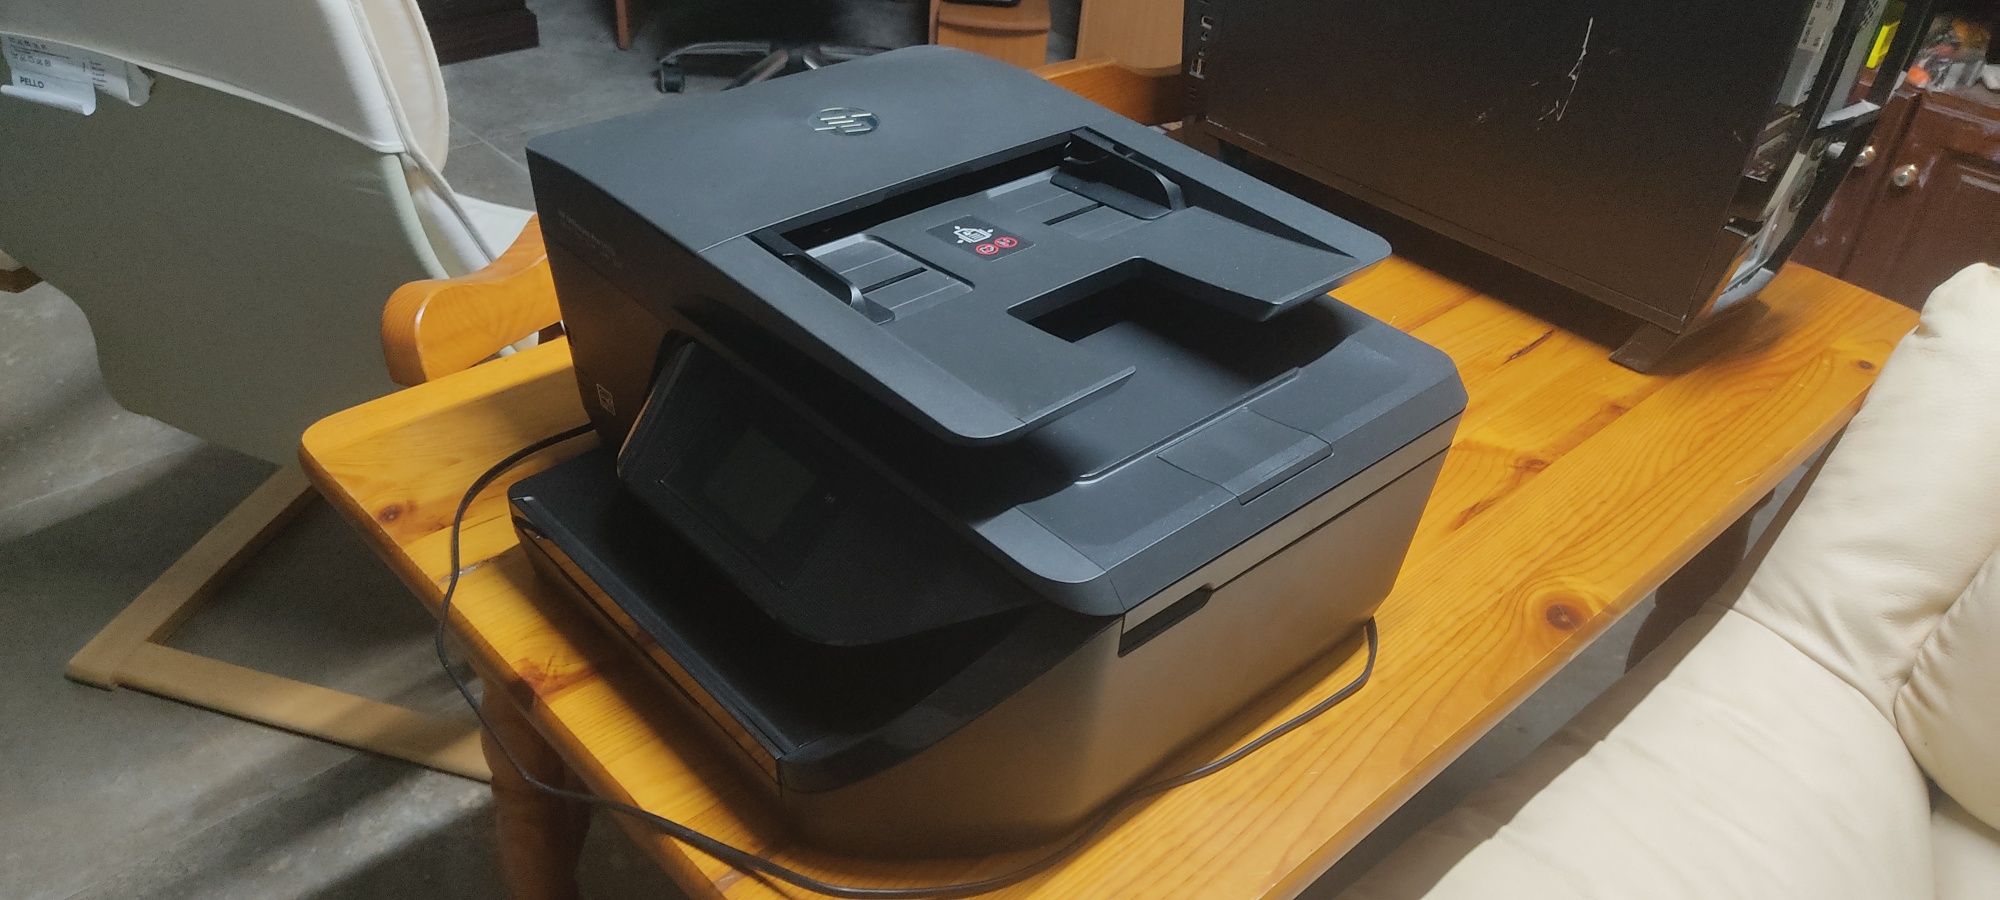 Impressora ‎Jato de tinta HP Officejet Pro 6970